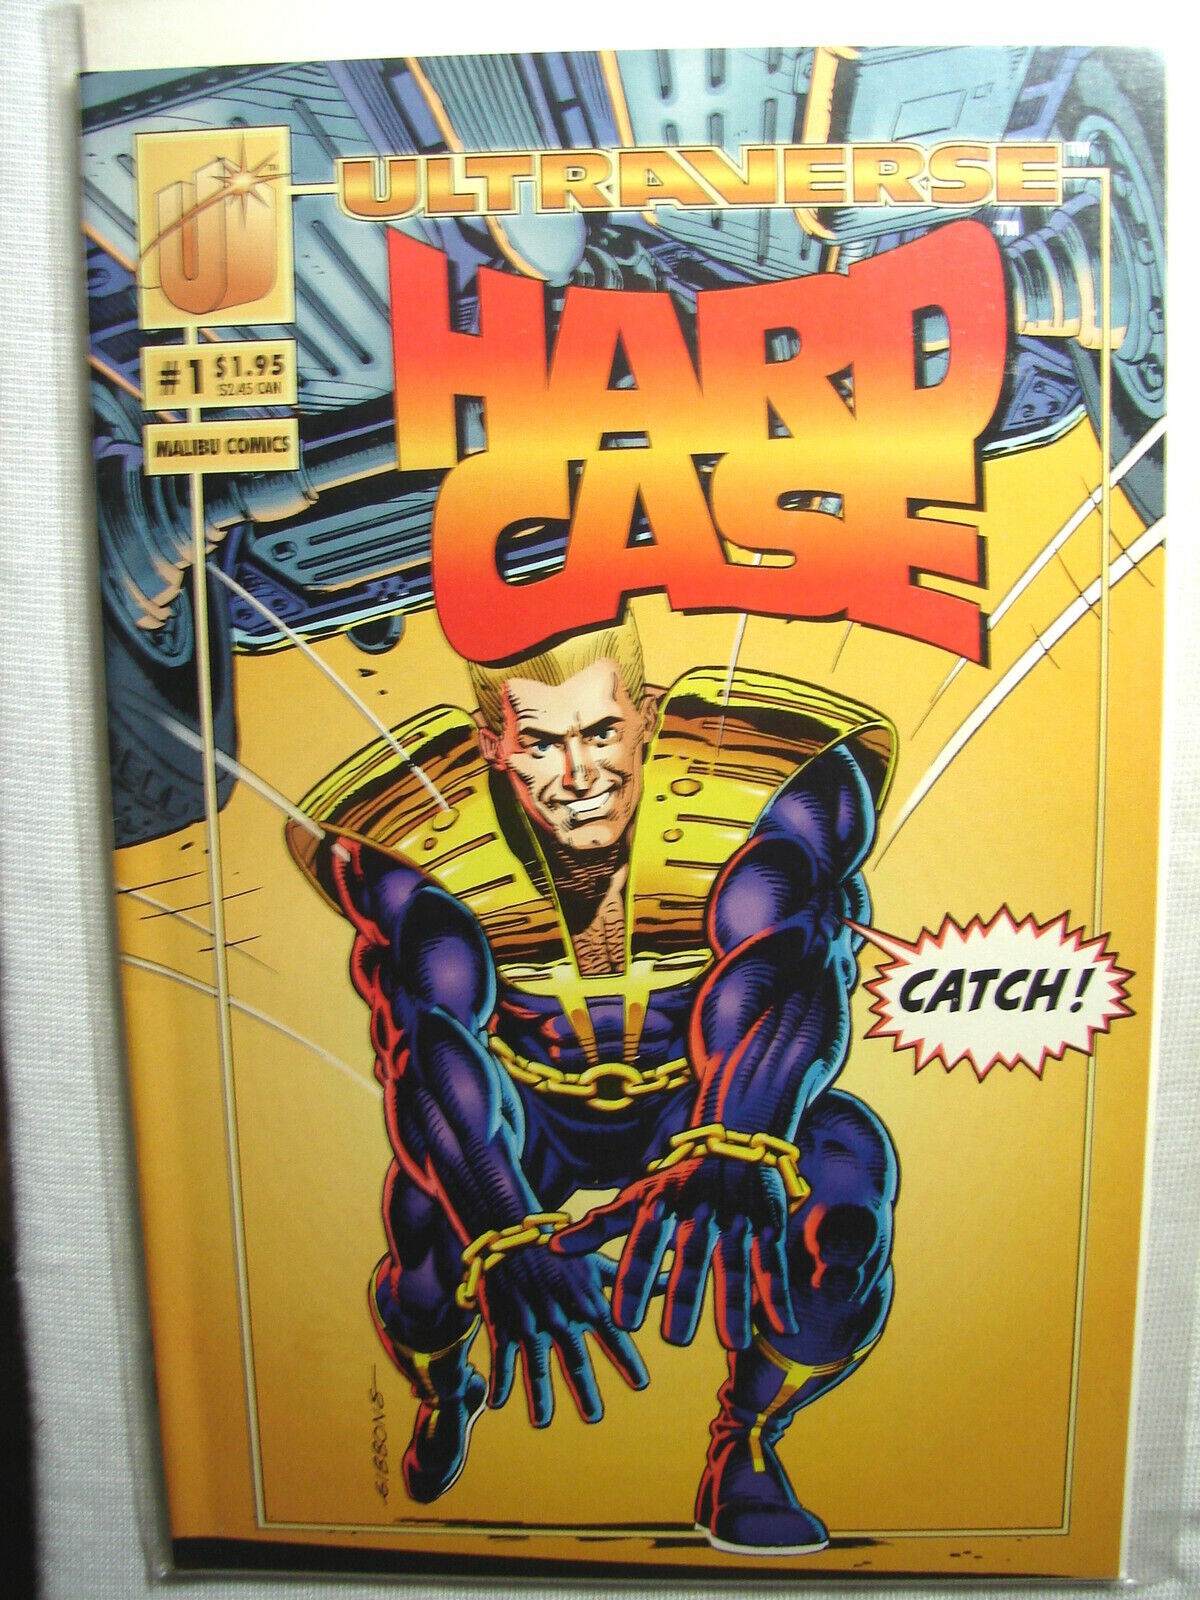 C 2667 Malibu Comics 1993 ULTRAVERSE HARD CASE  #1  M / NM Condition